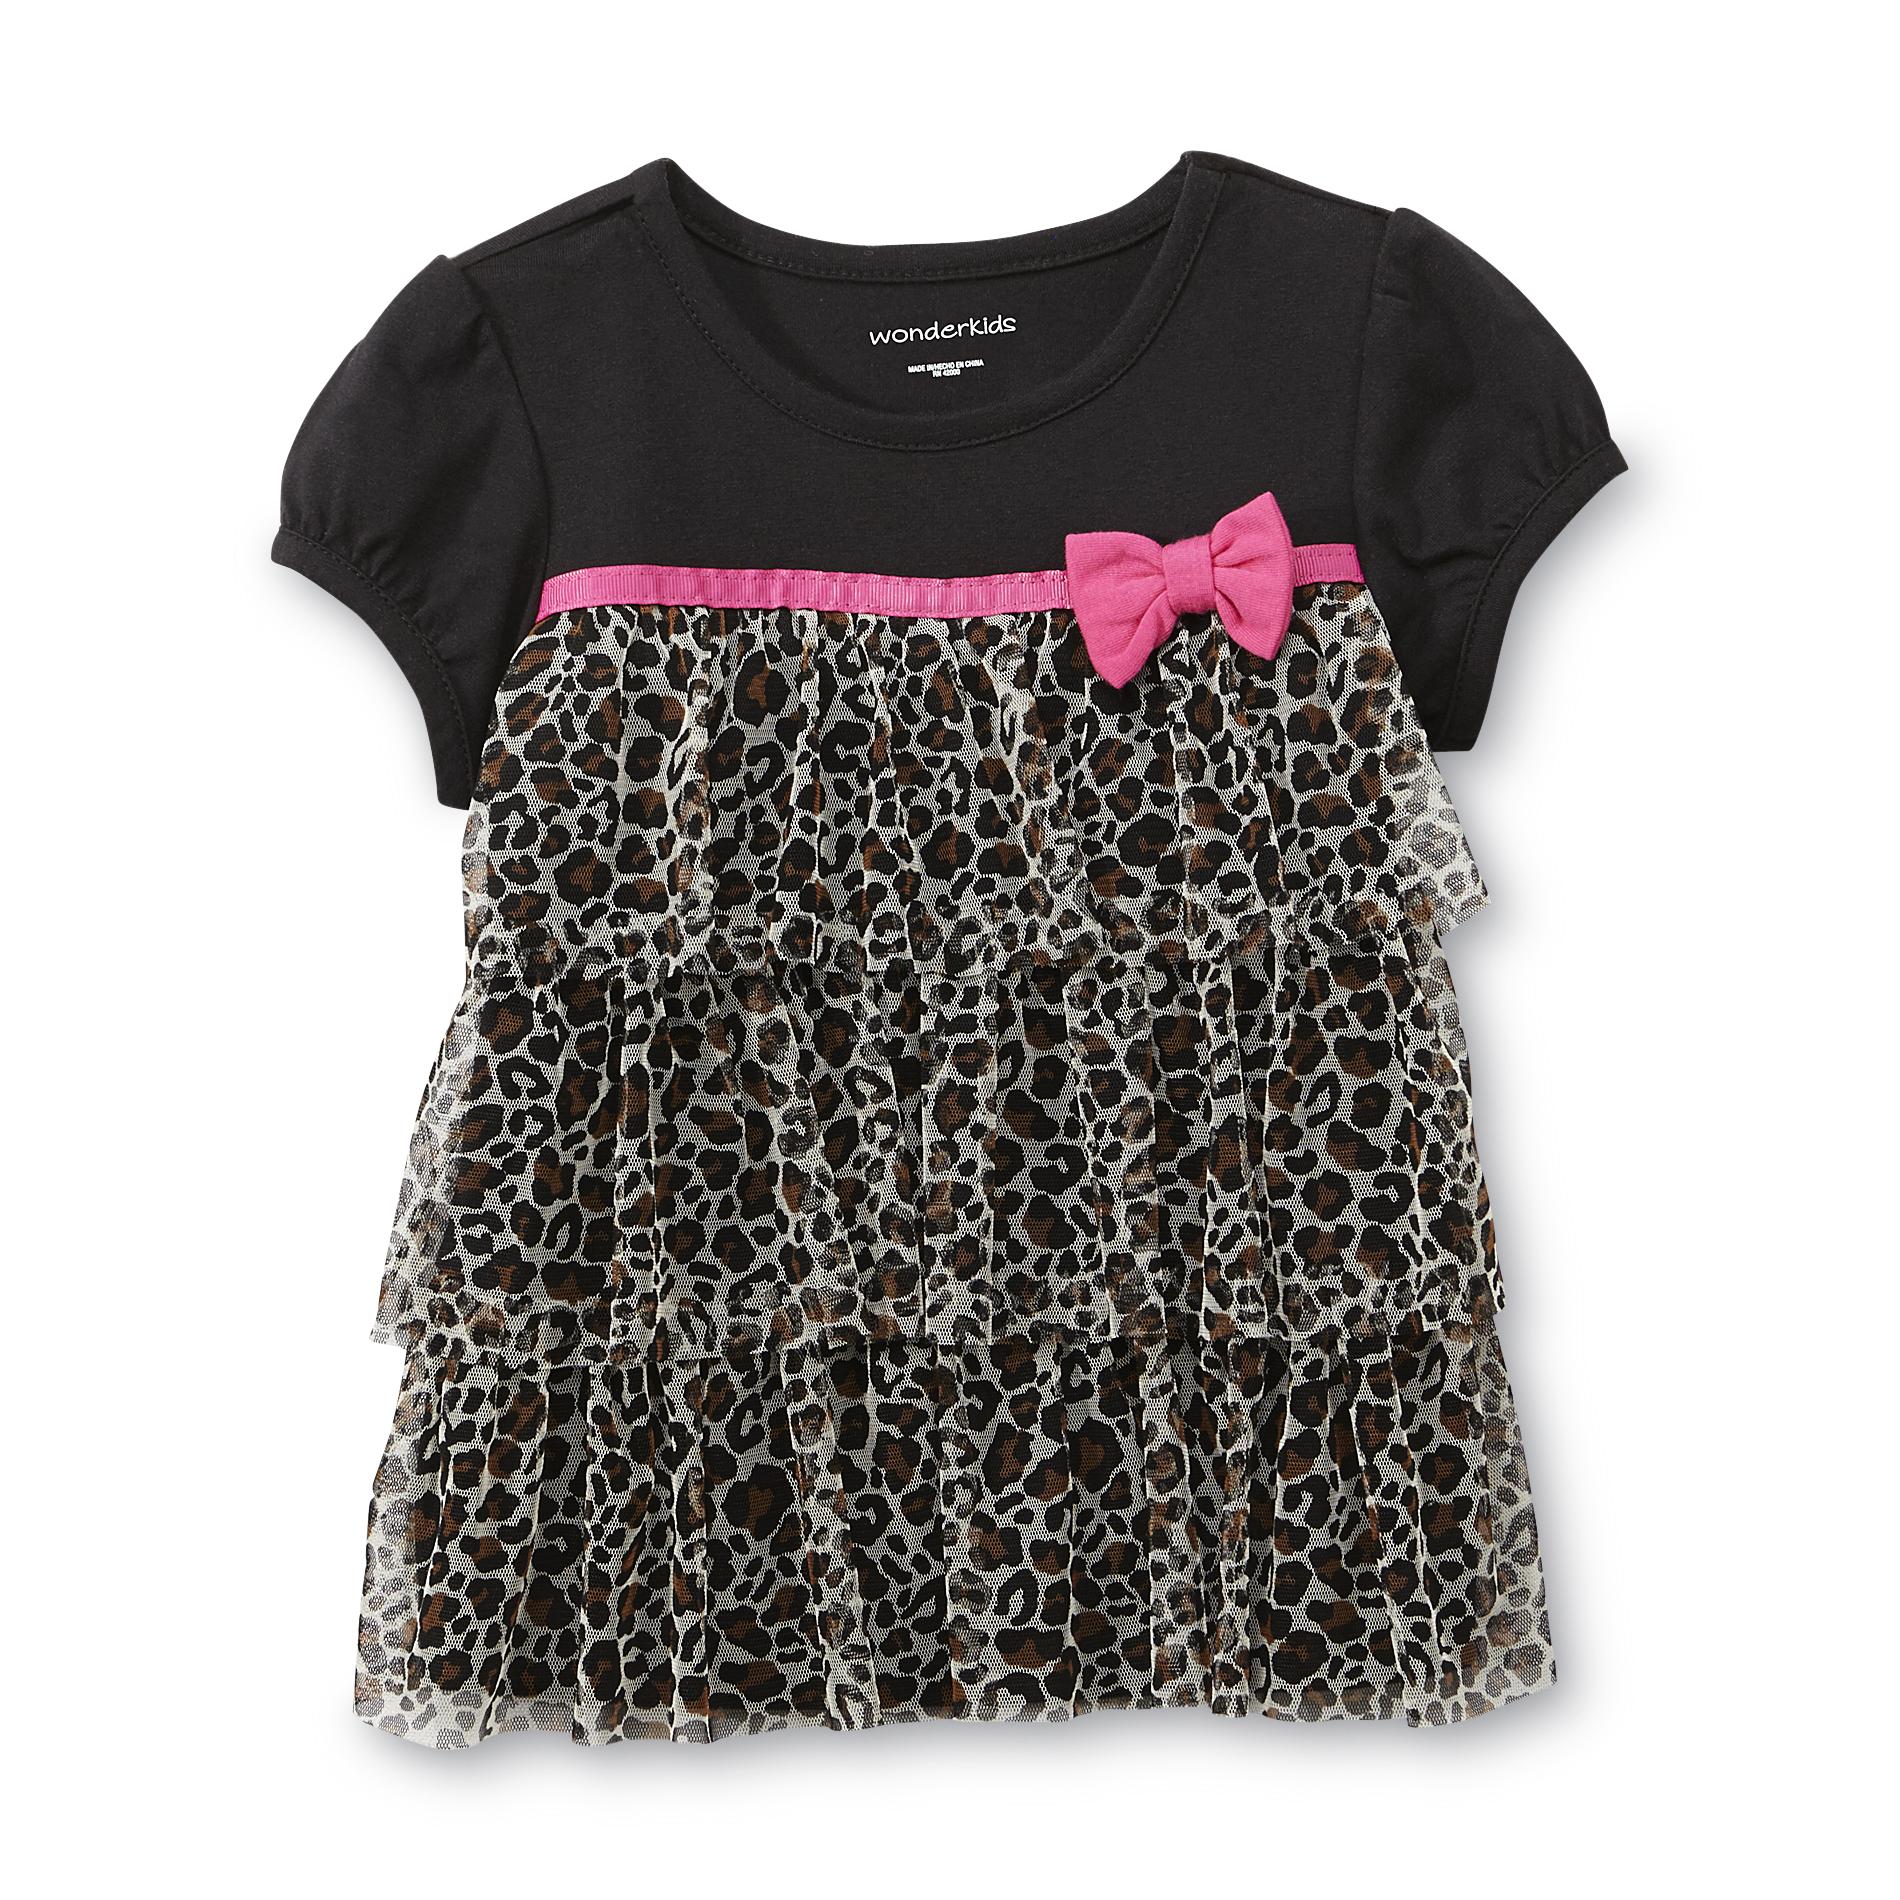 WonderKids Infant & Toddler Girl's Tiered Top - Leopard Print